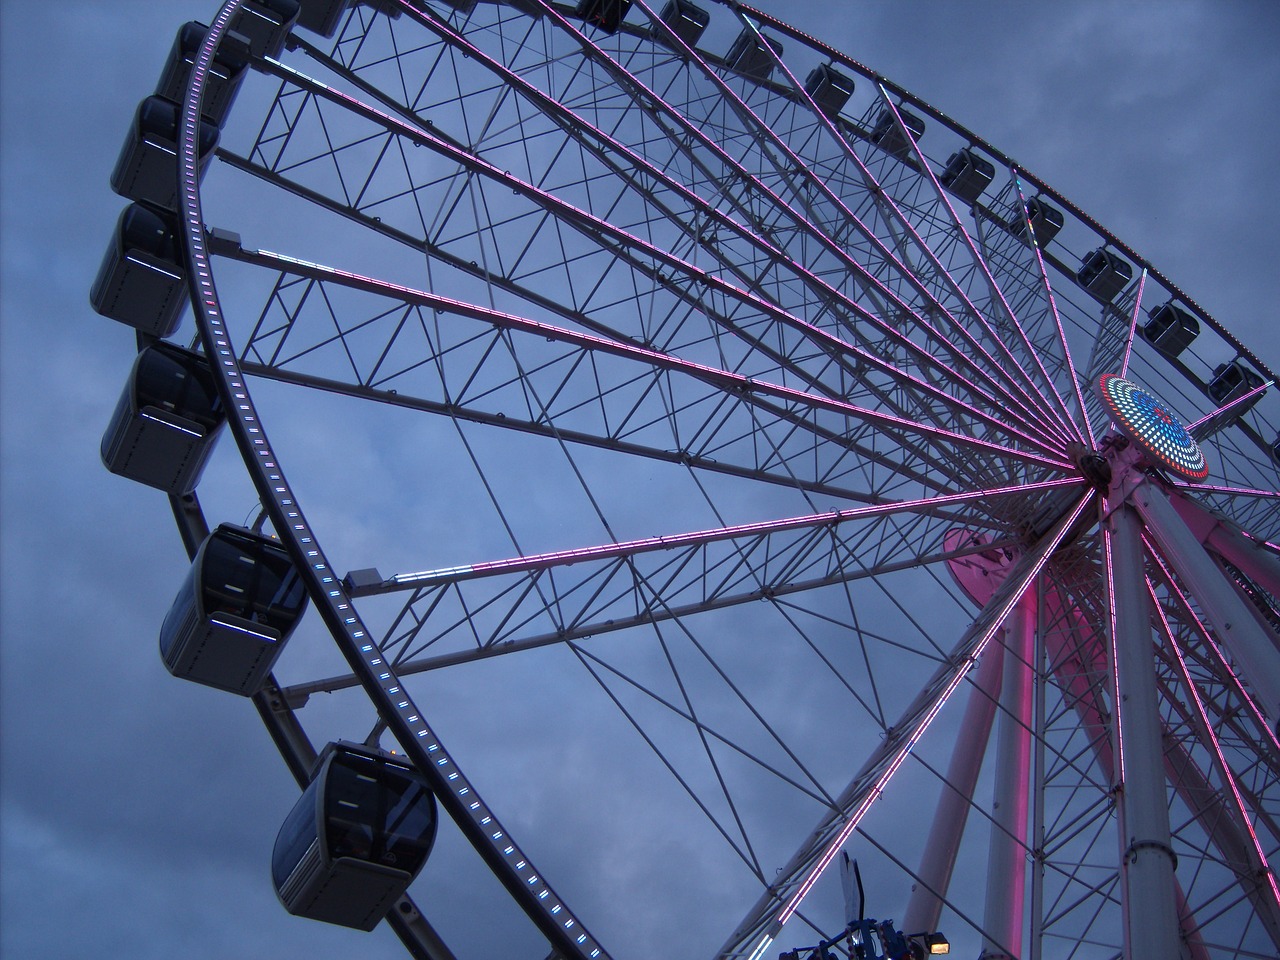 Ferris wheel in Pigeon Forge